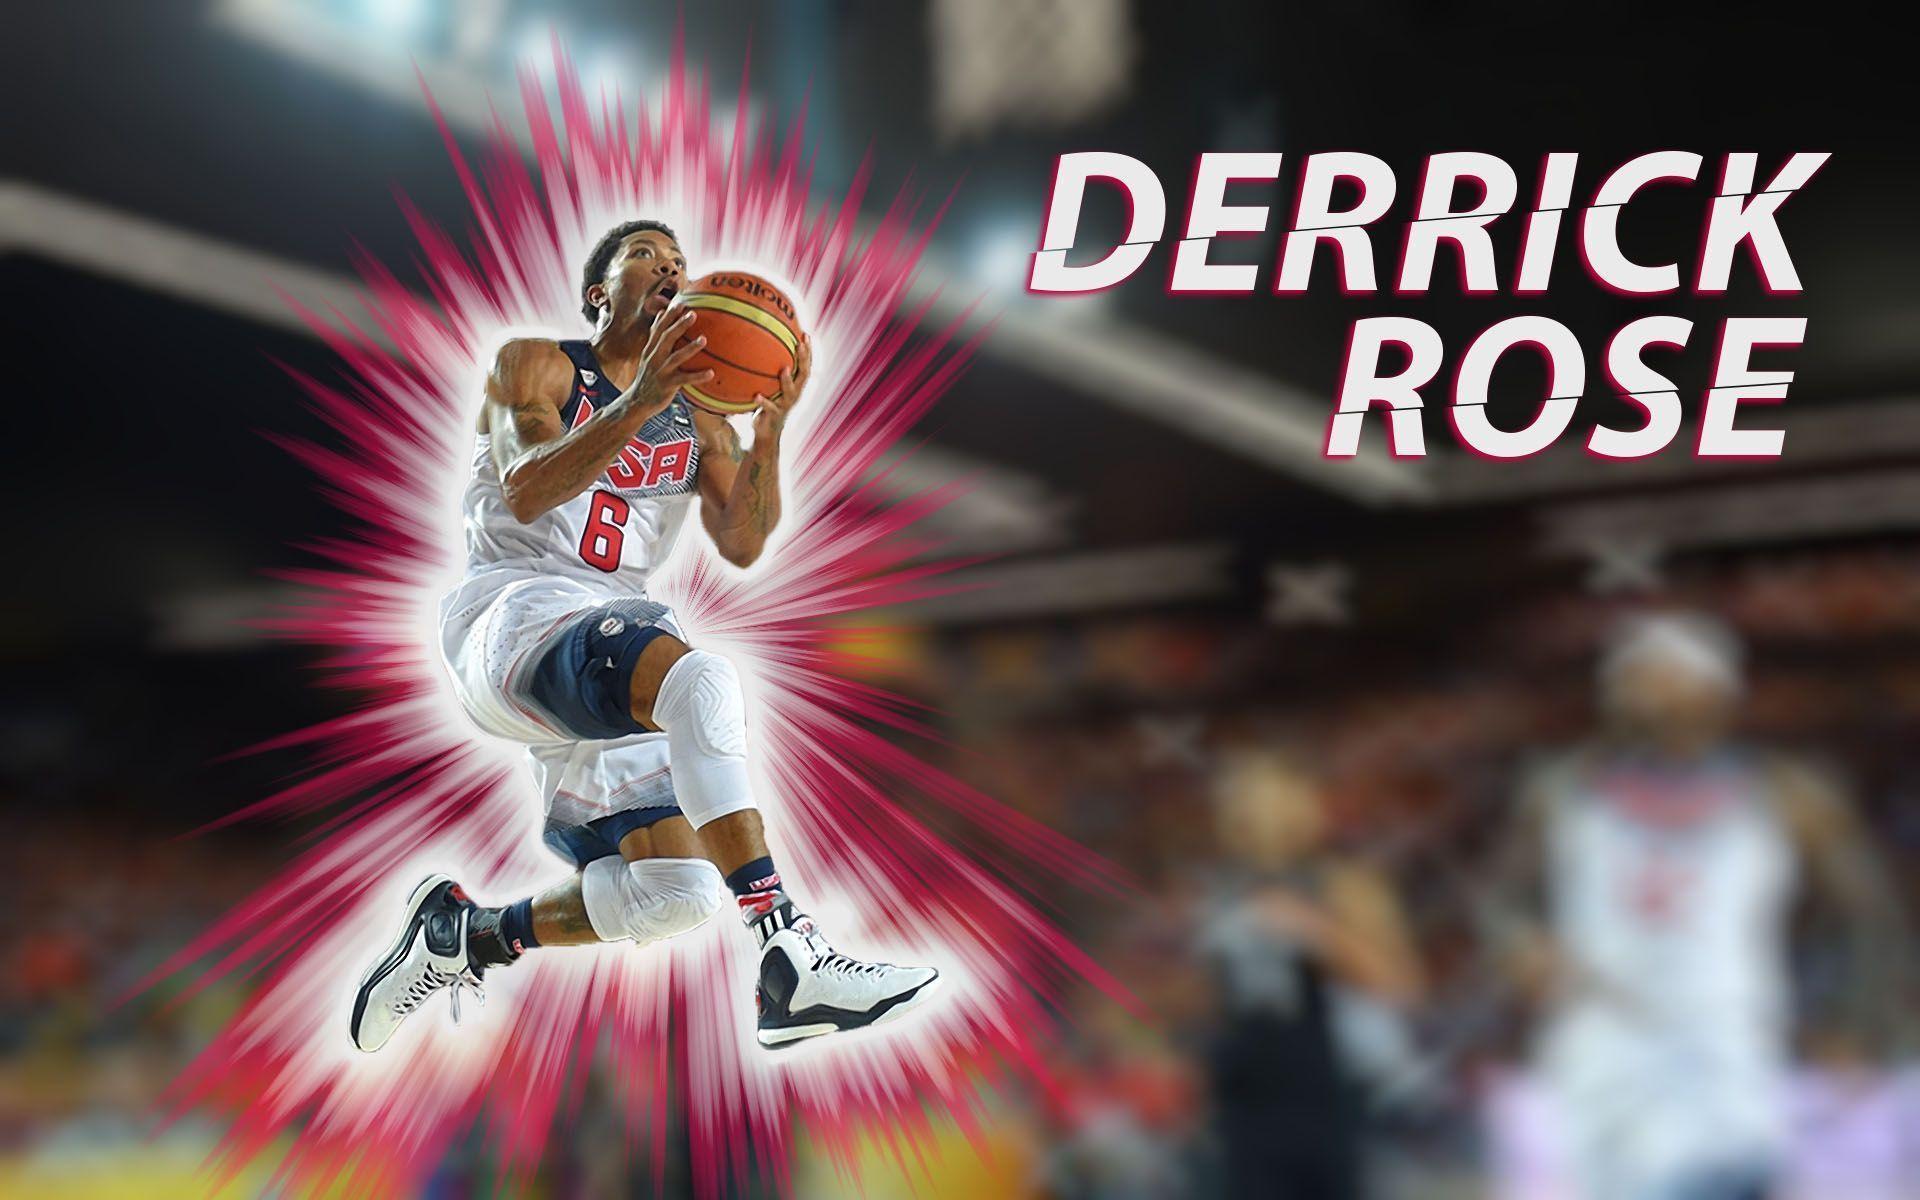 Derrick Rose 2014 USA Basketball Wallpaper Wide or HD. Male